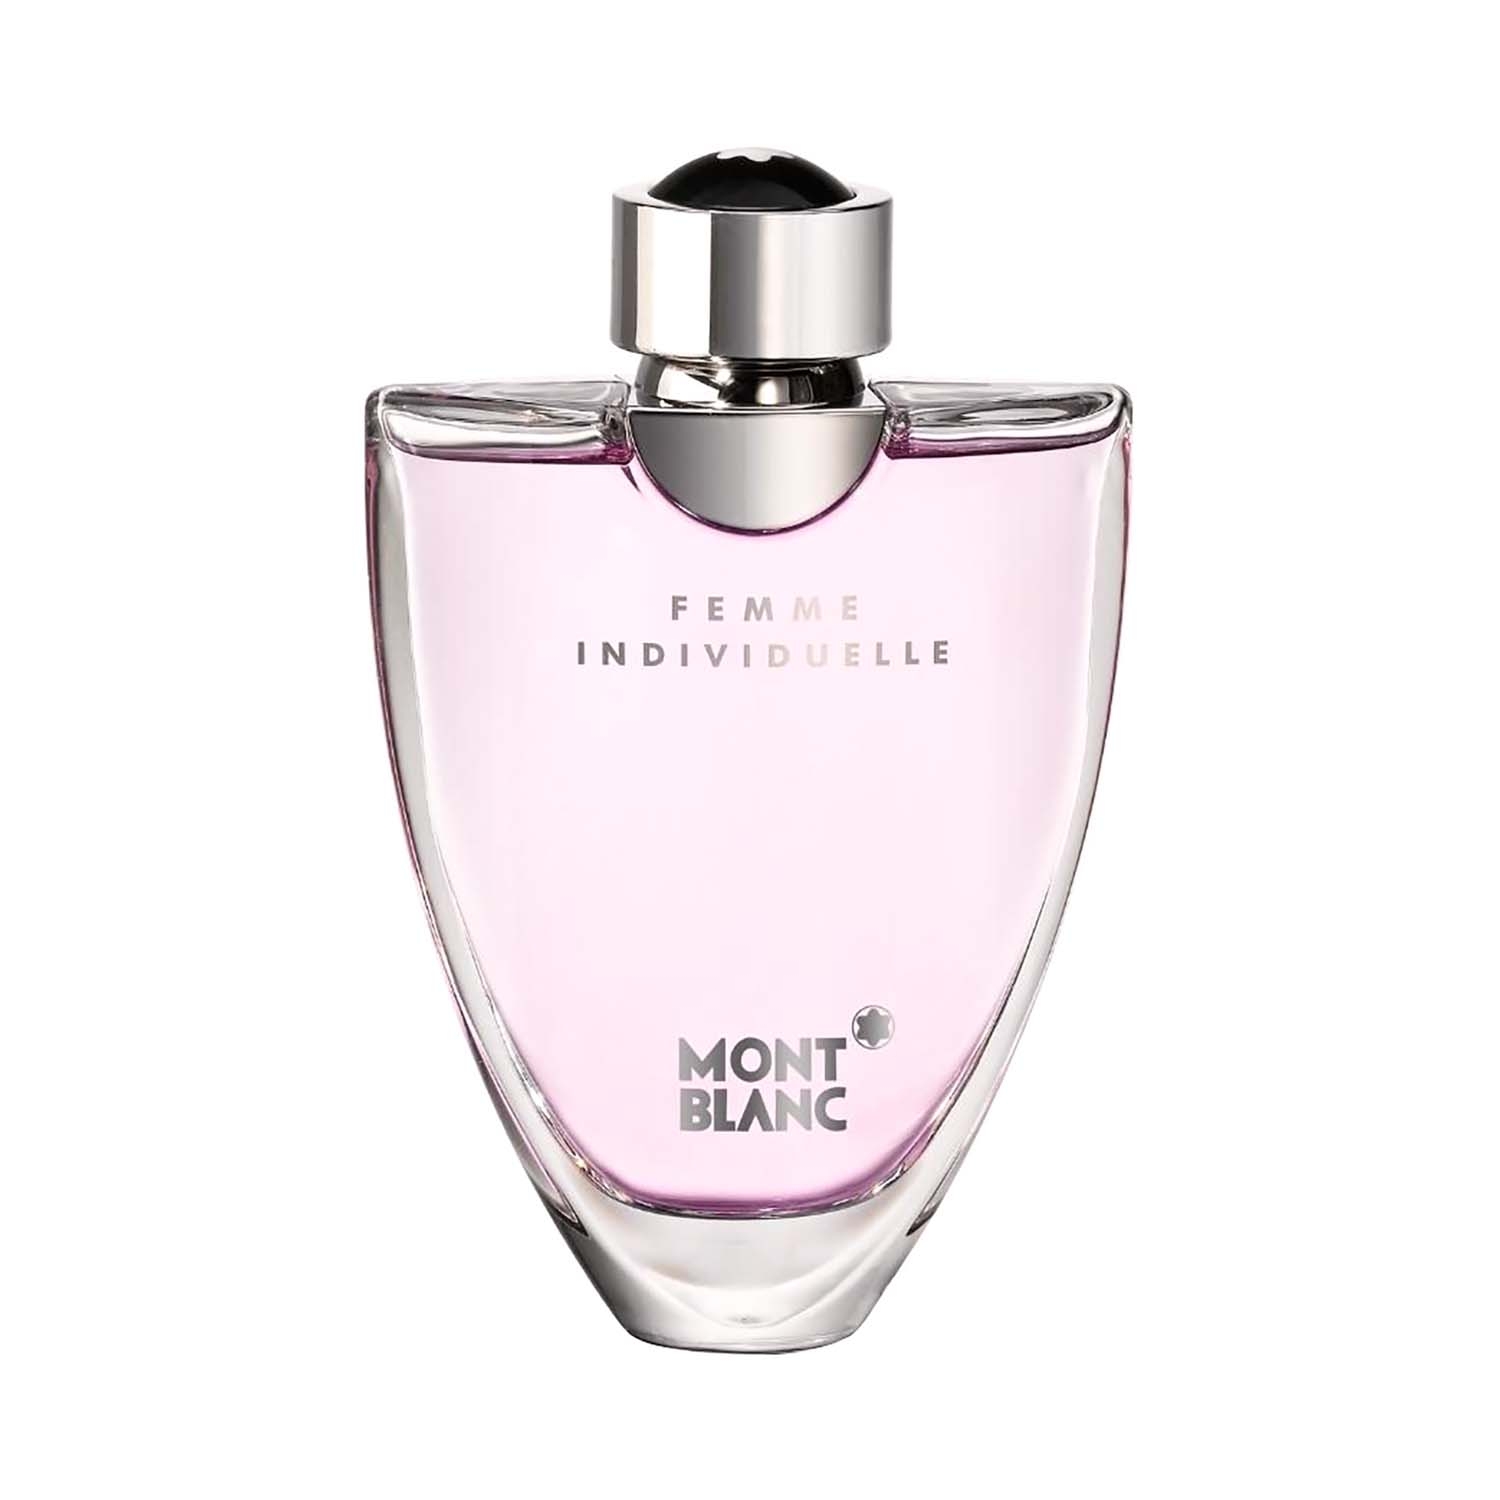 Buy DKNY Nectar Love Eau de Parfum (100ml) Online at Best Price in India -  Tira